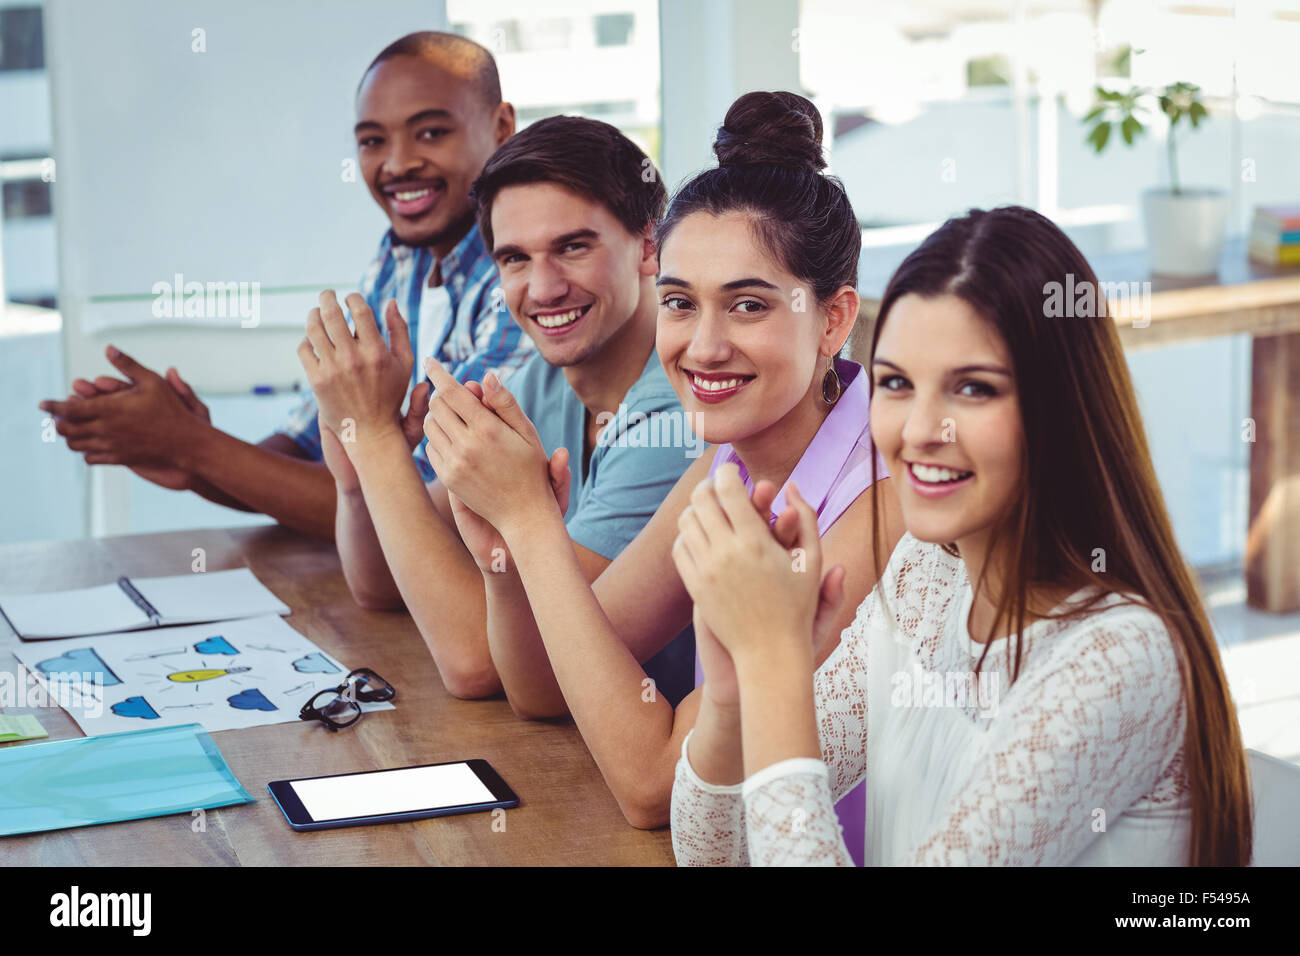 Creative business team at meeting applauding Stock Photo